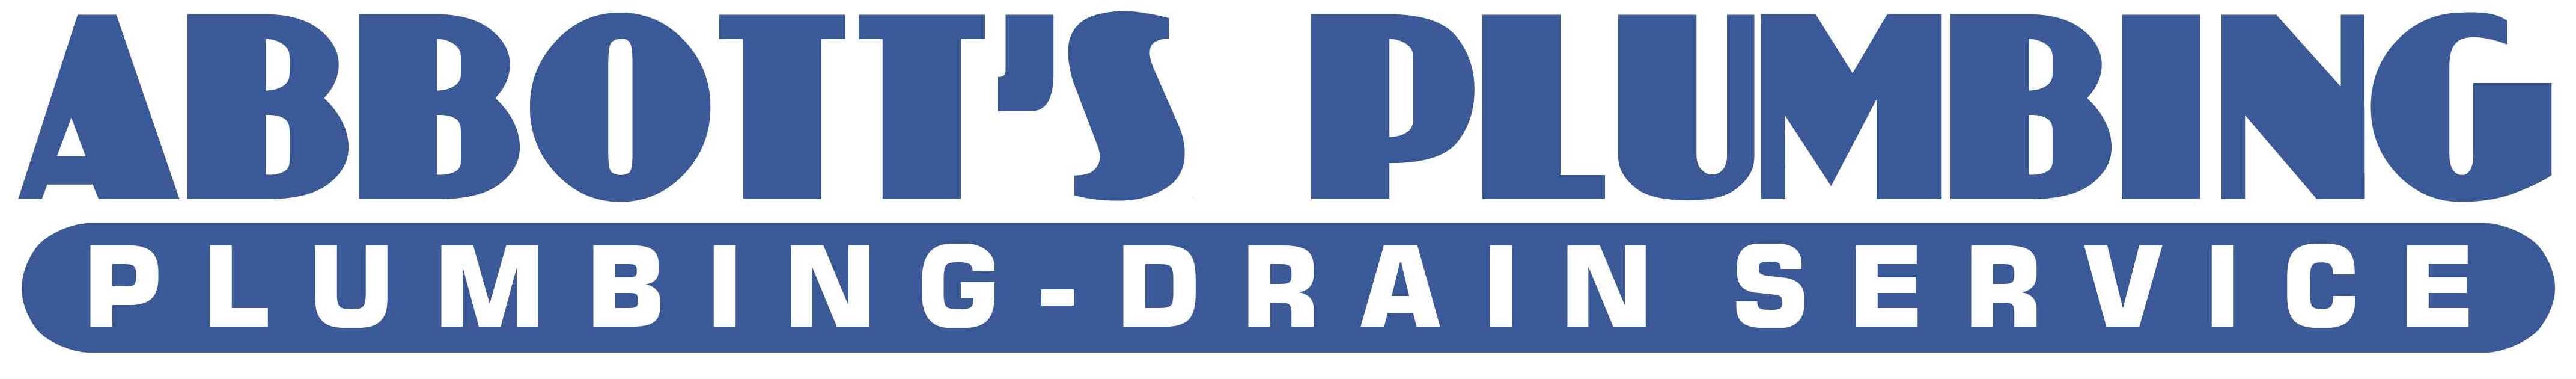 Abbott's Plumbing, Inc. Logo